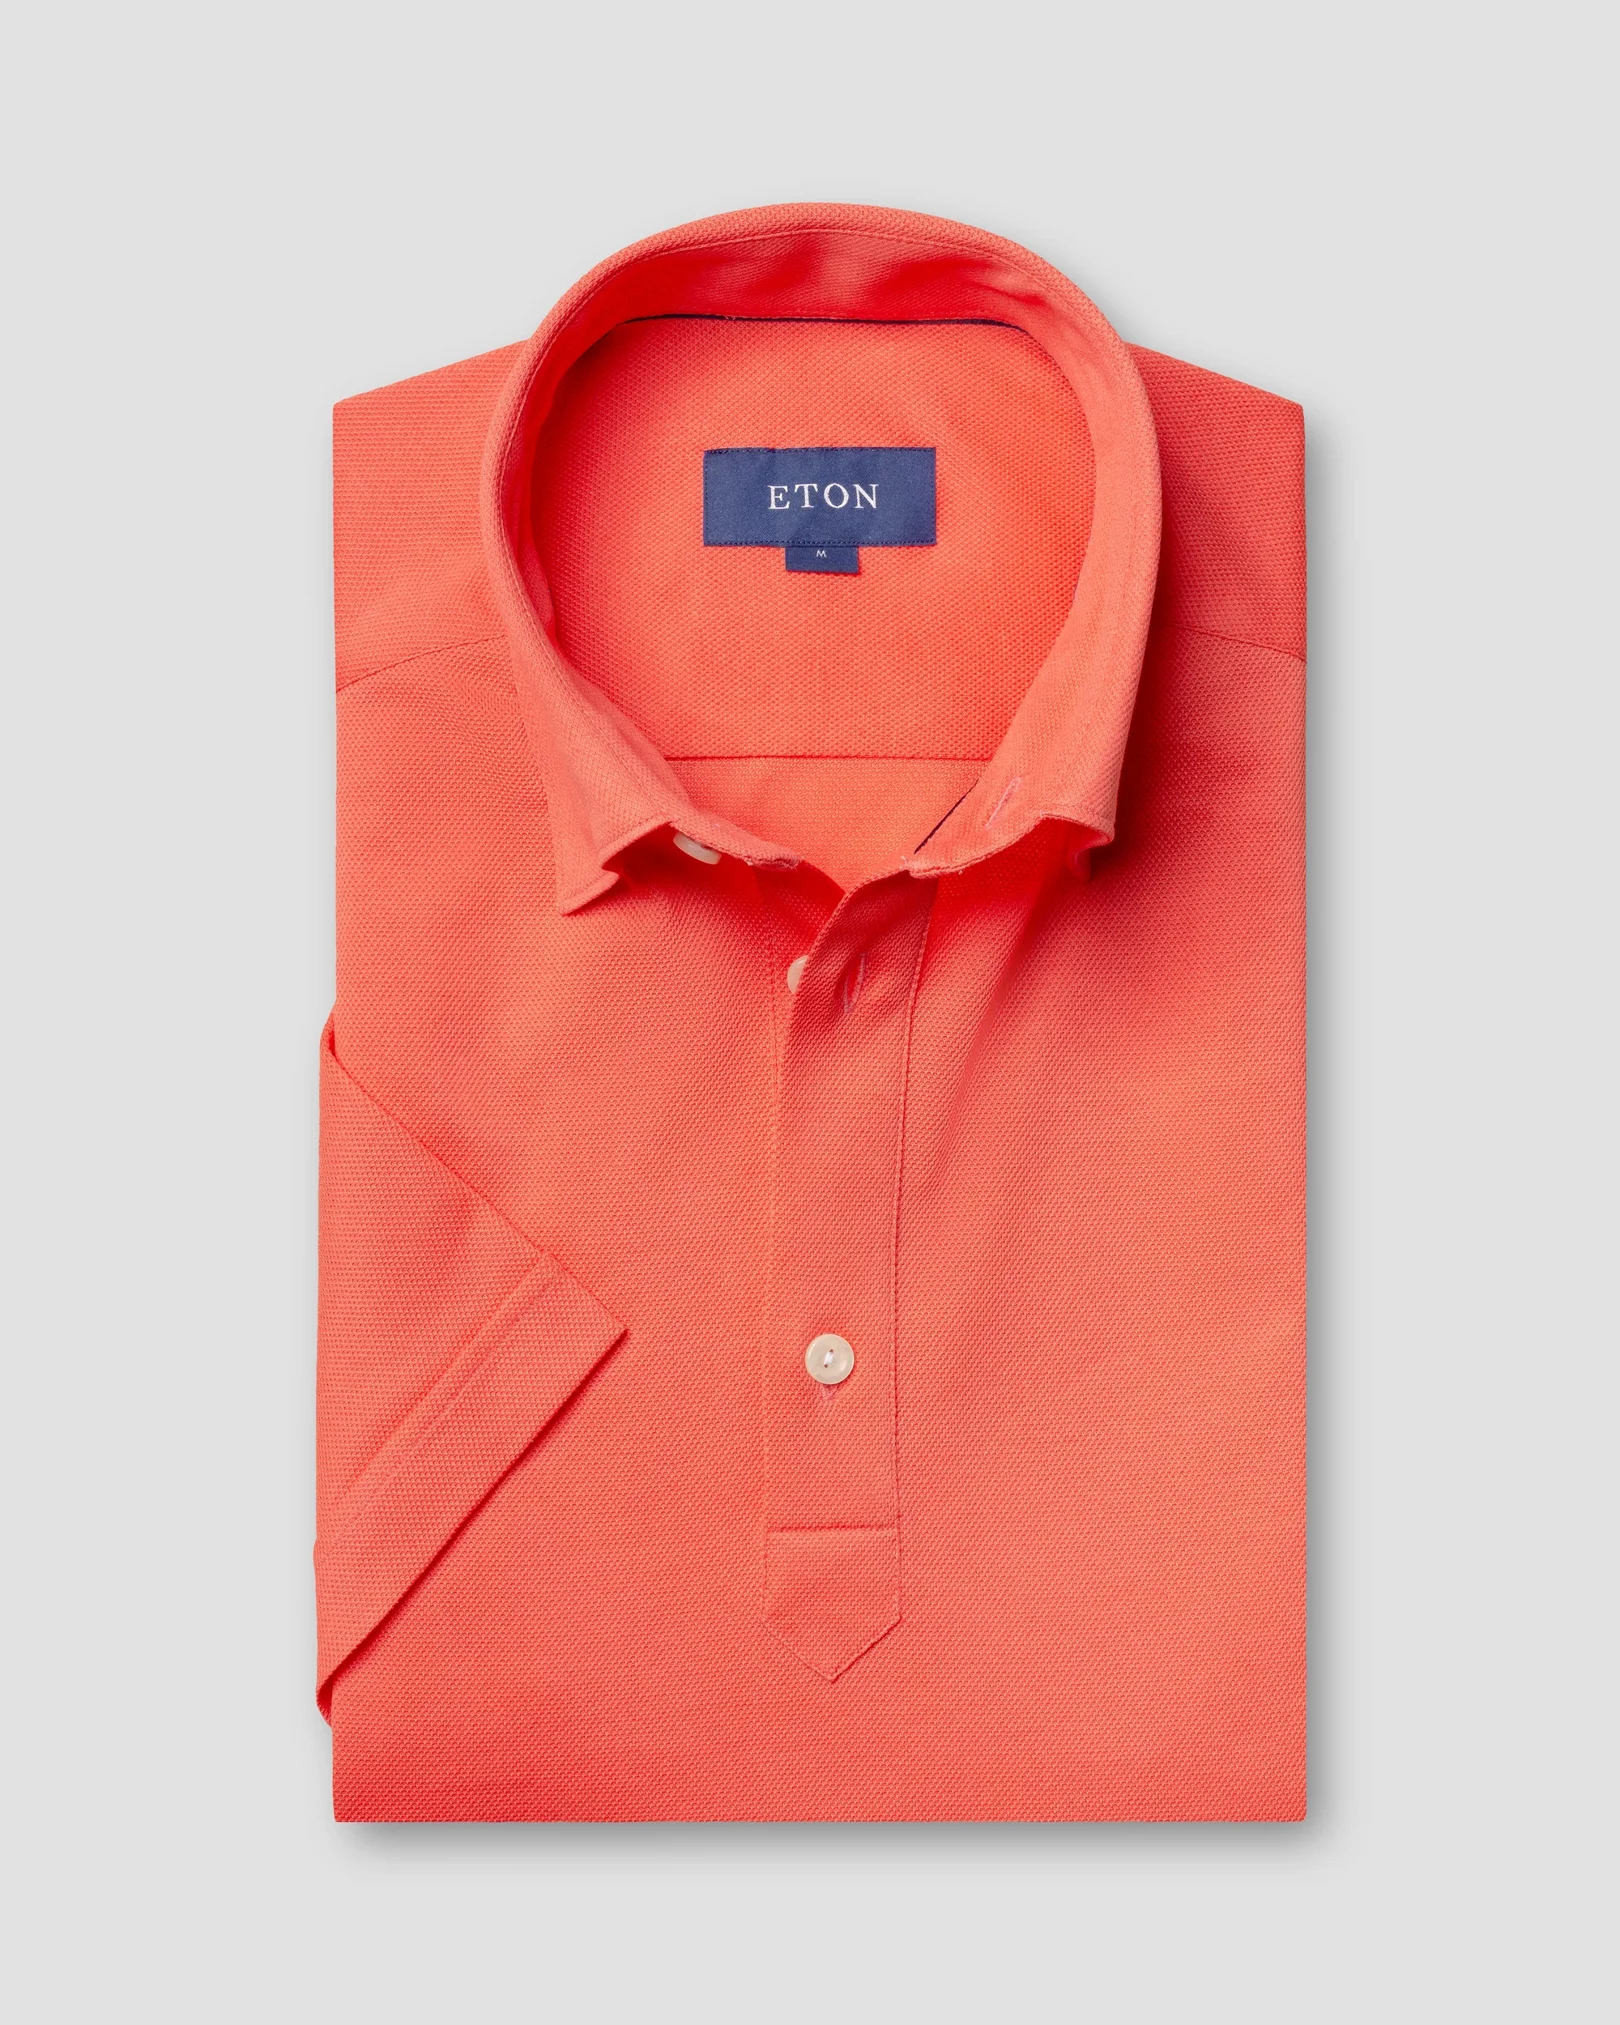 Eton - coral polo shirt short sleeved